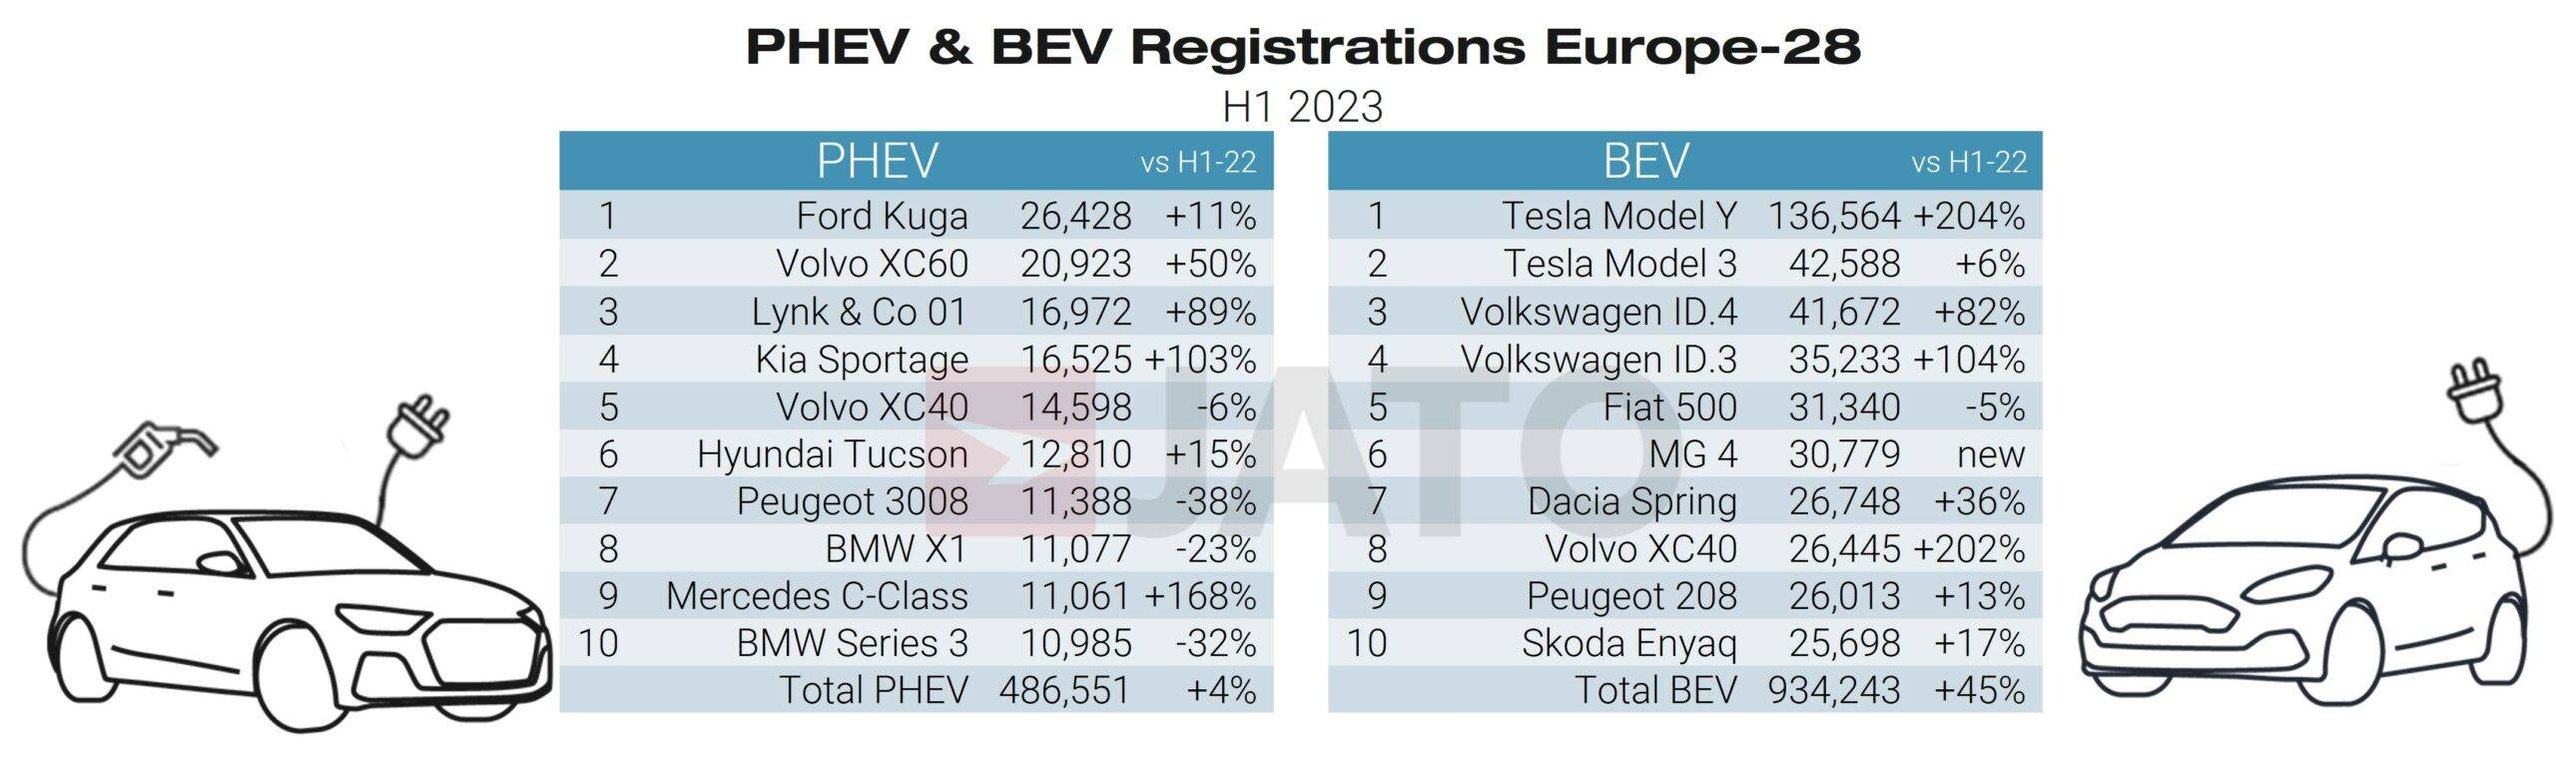 PHEV & BEV Registrations Europe